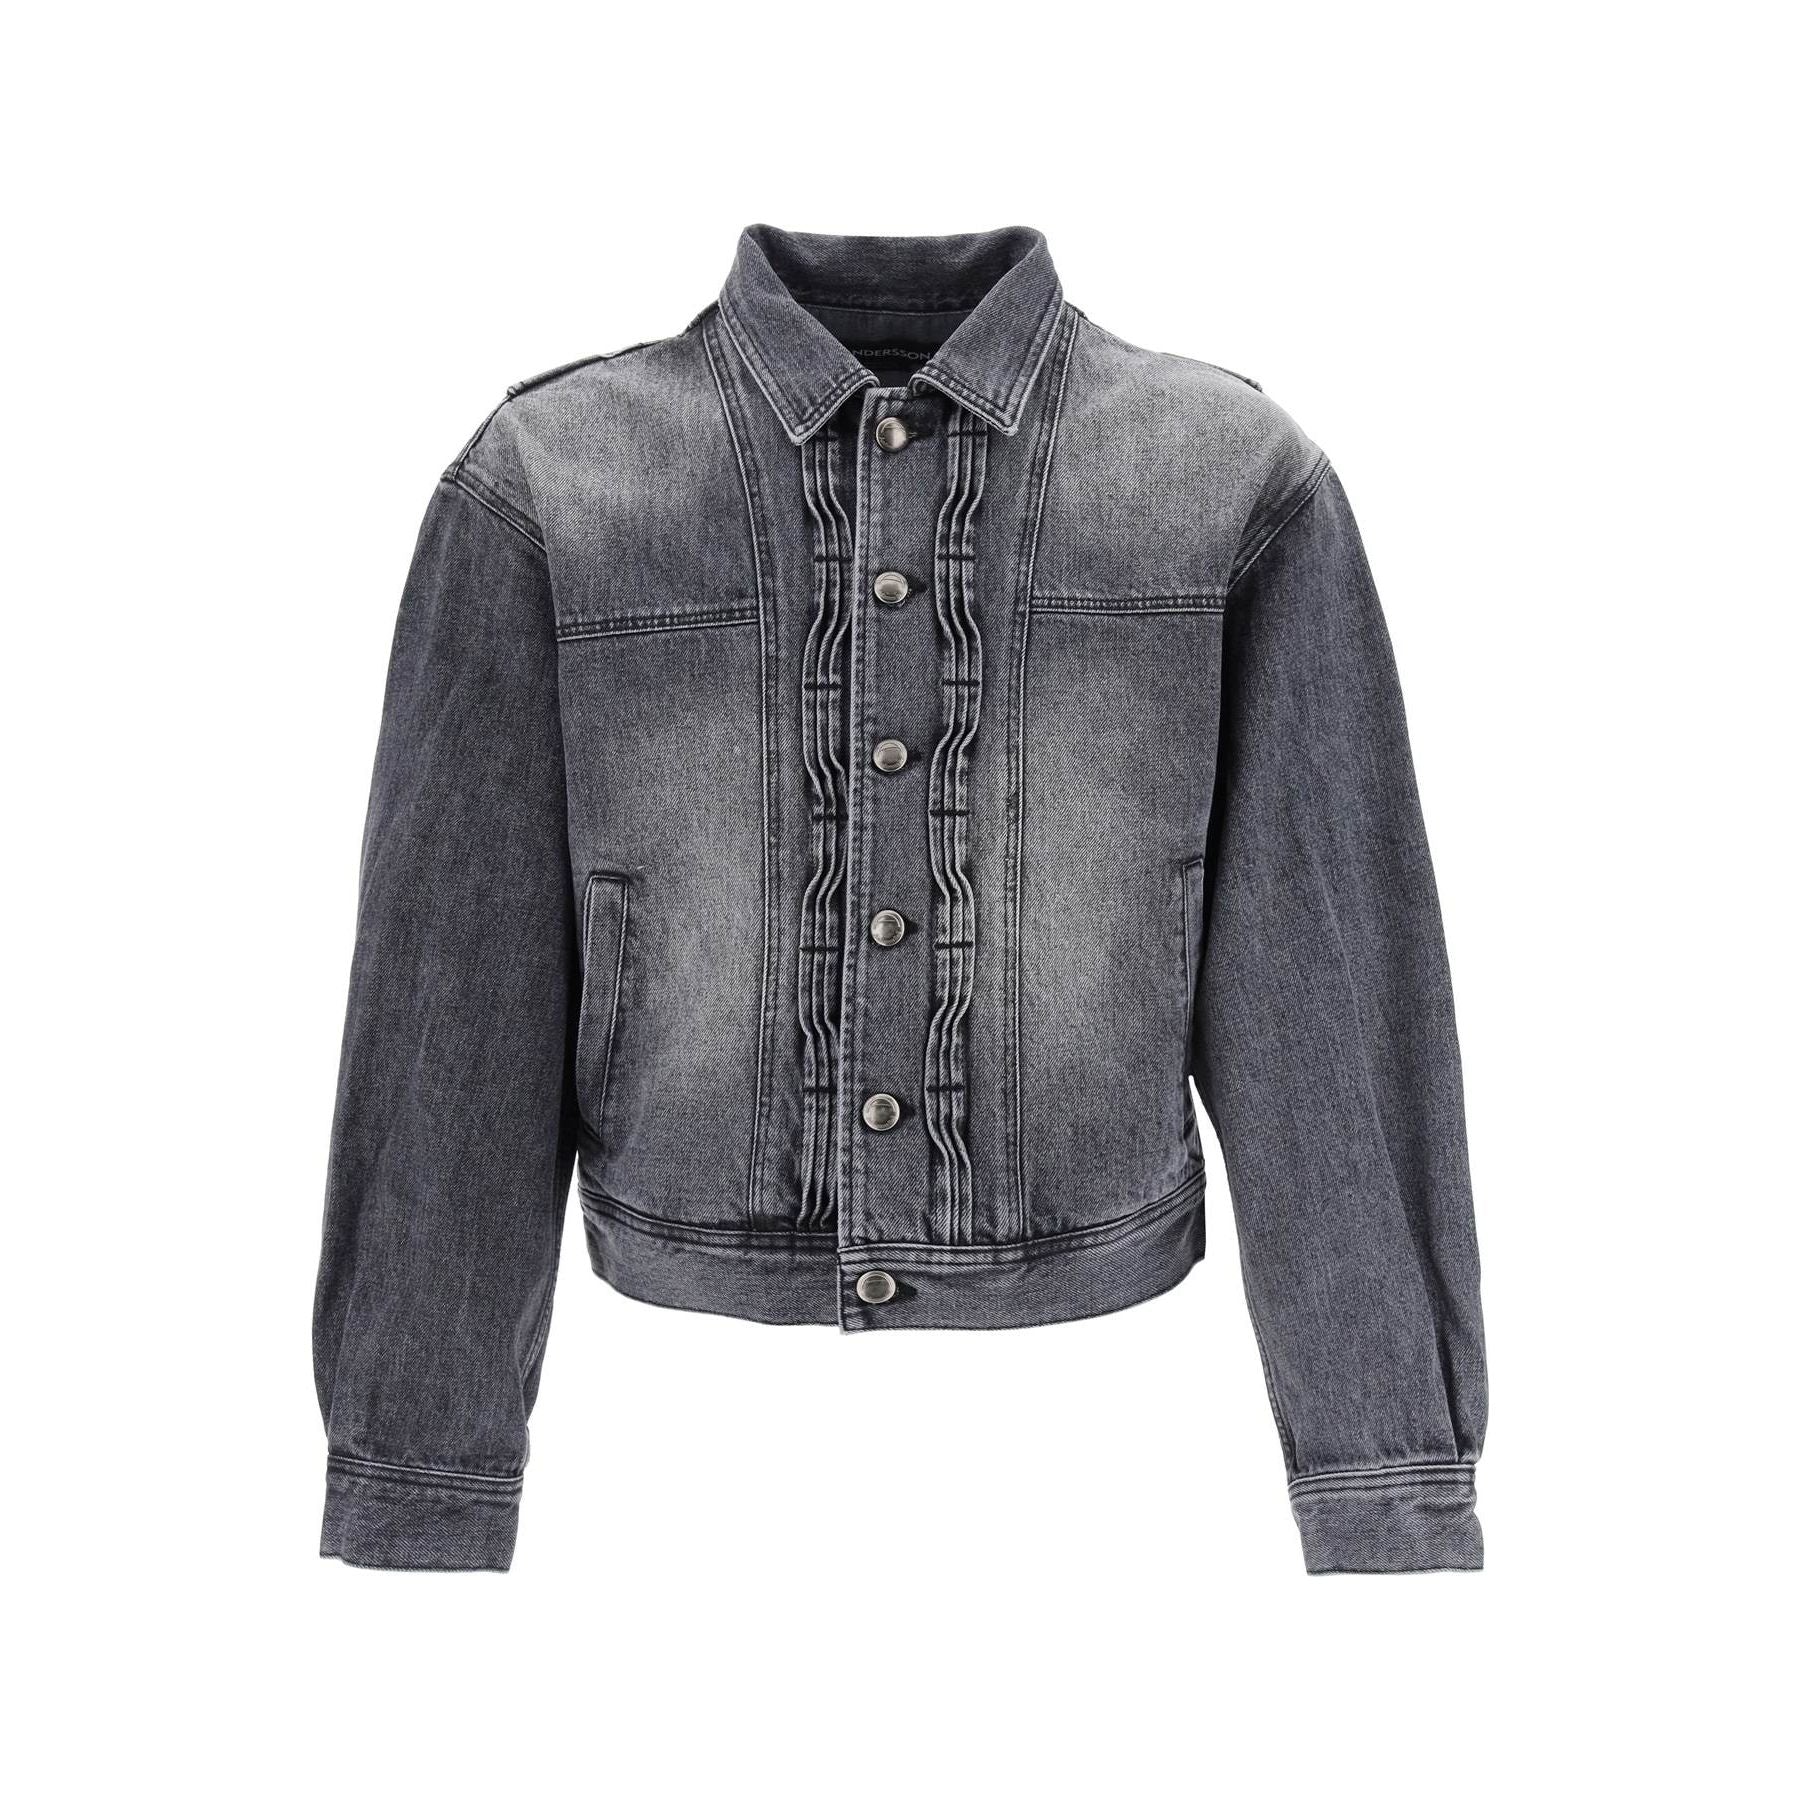 Stone-Washed Cotton Denim Jacket with Wavy Details